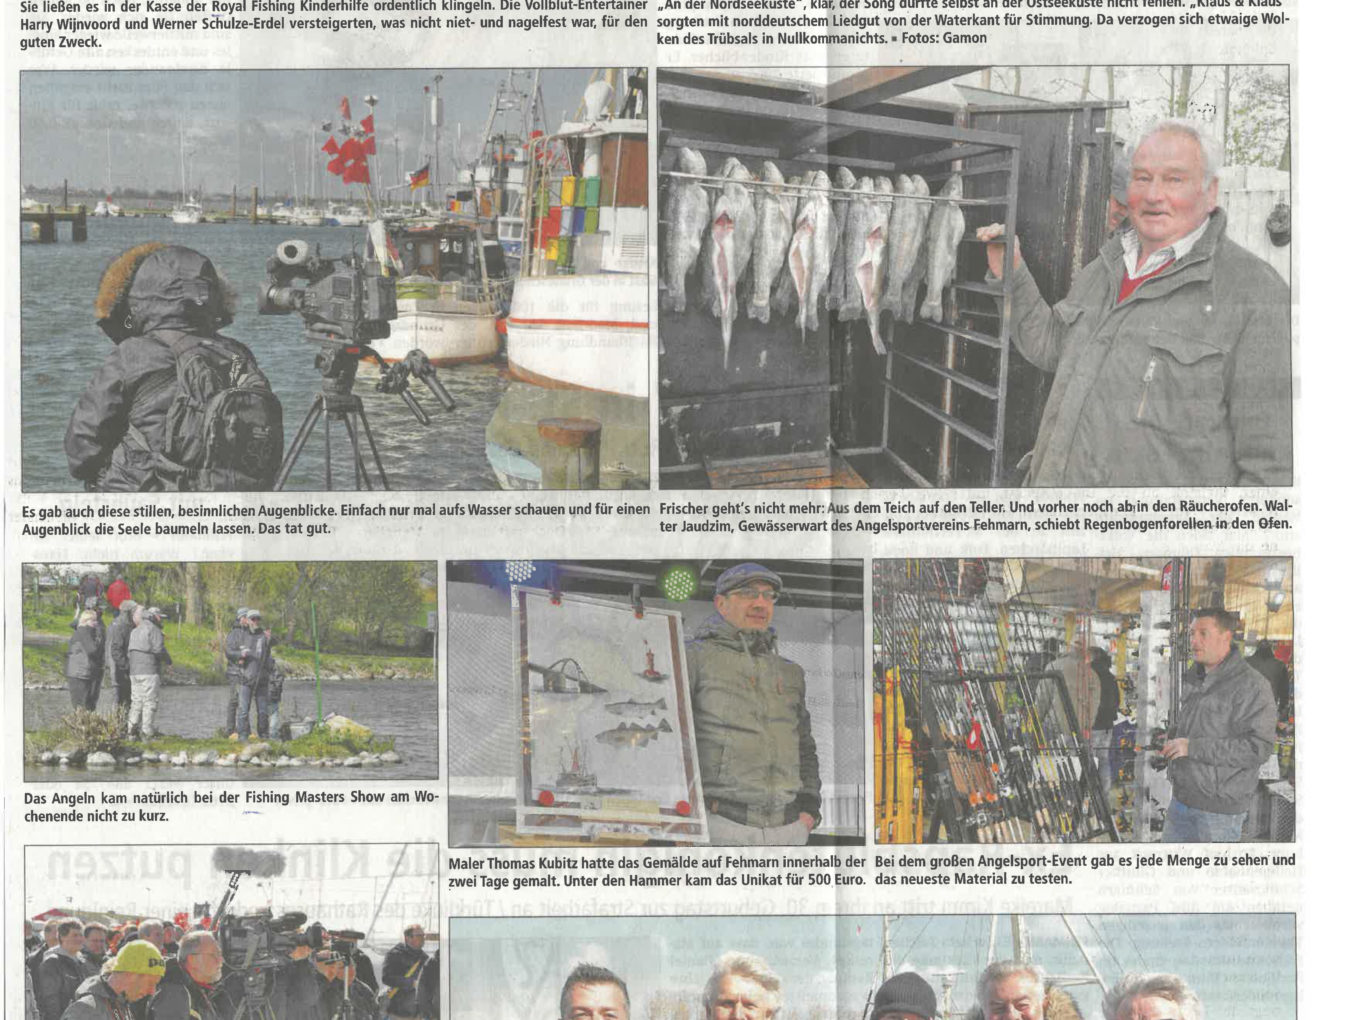 Fishing Masters Show in Bildern